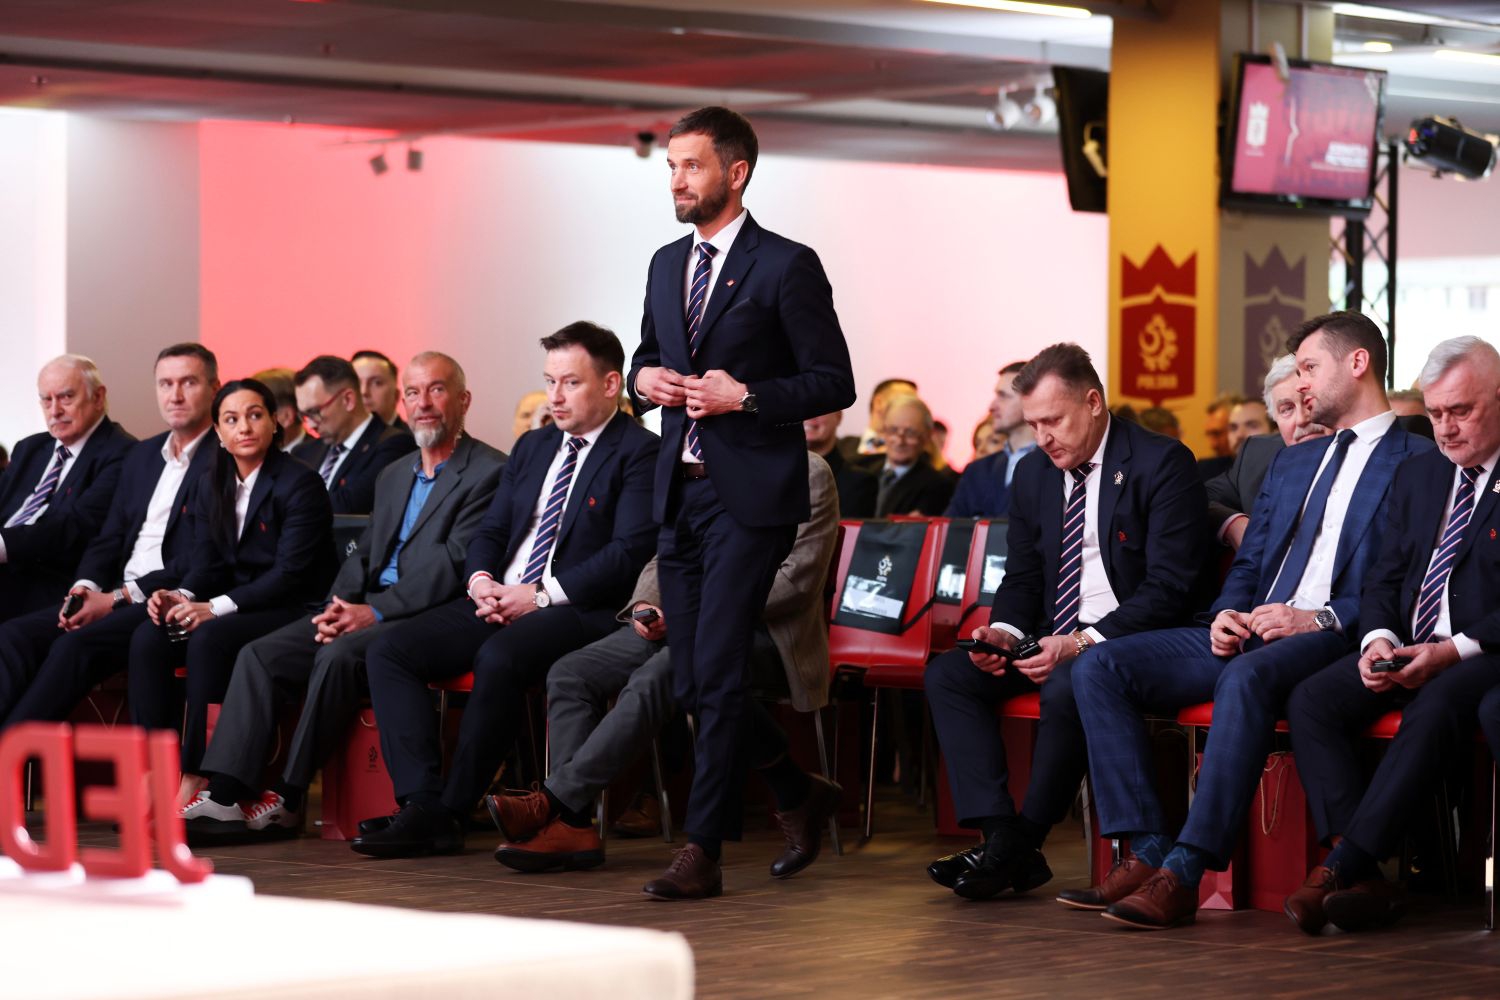 Polish national team: He will help choose a new coach